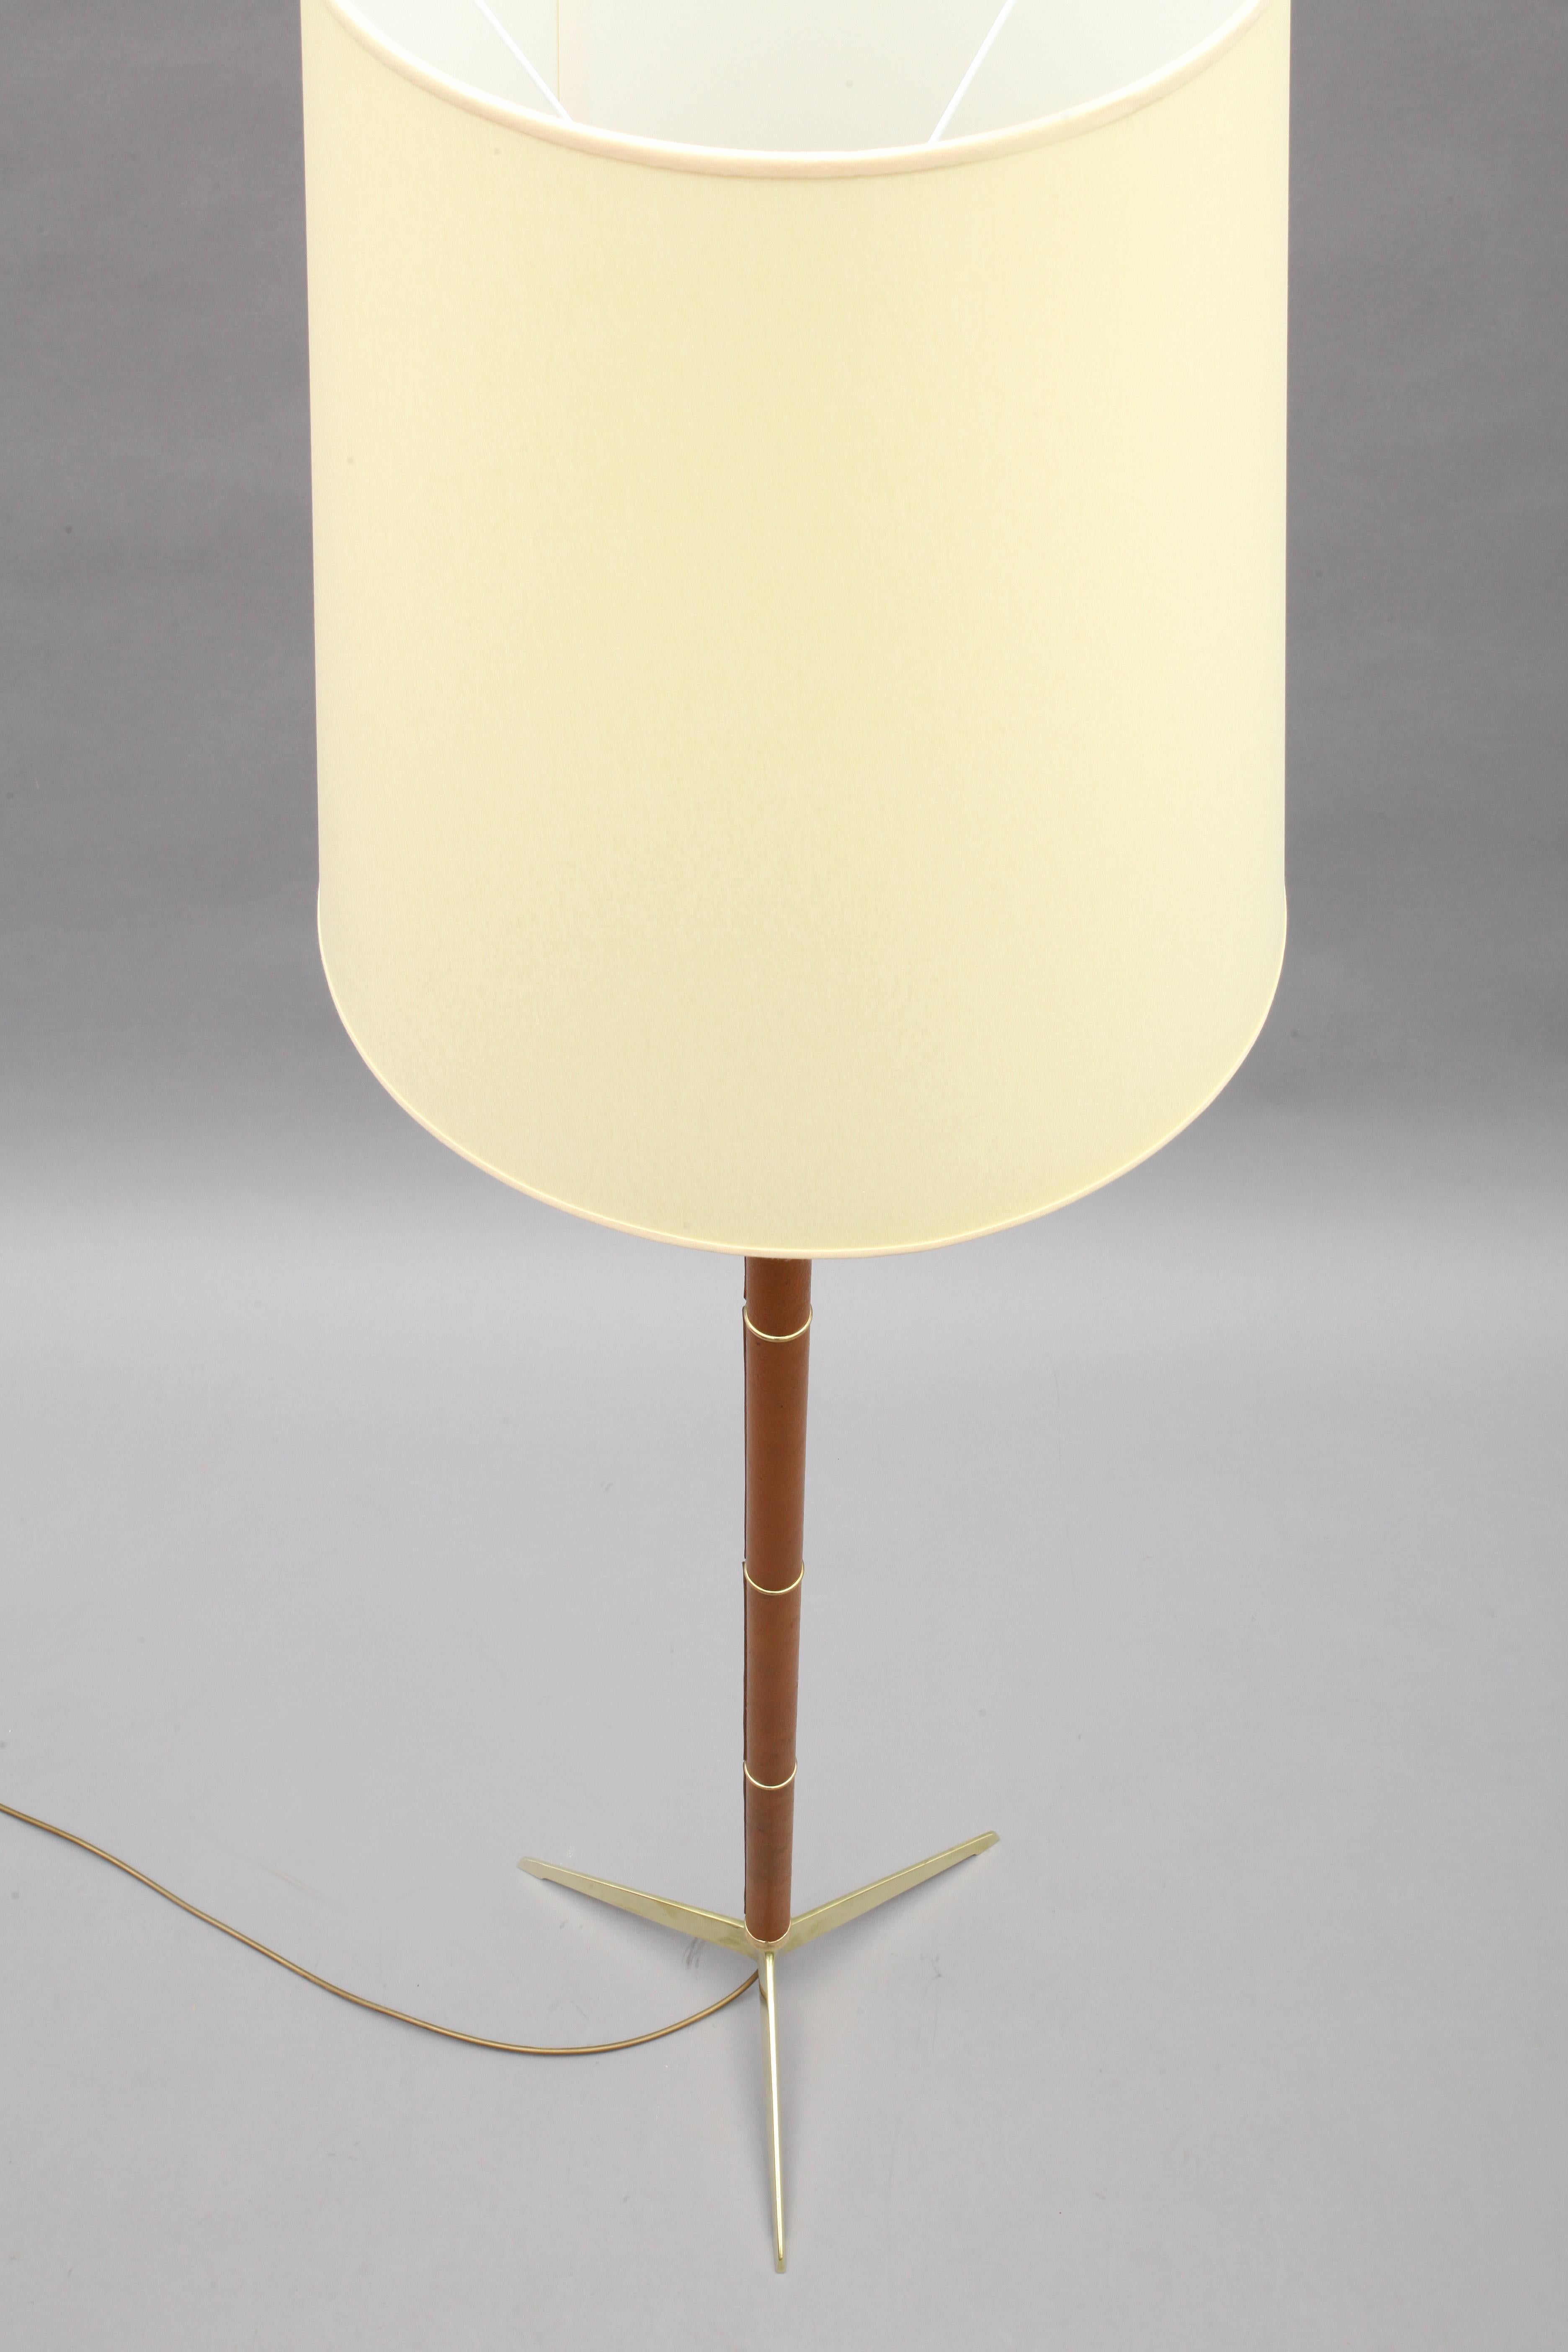 Floorlamp,
attributed Arredoluce,
Italy 1950
brass triangle base,
leather stam,
fabric shade
three bulb sockets E 27.